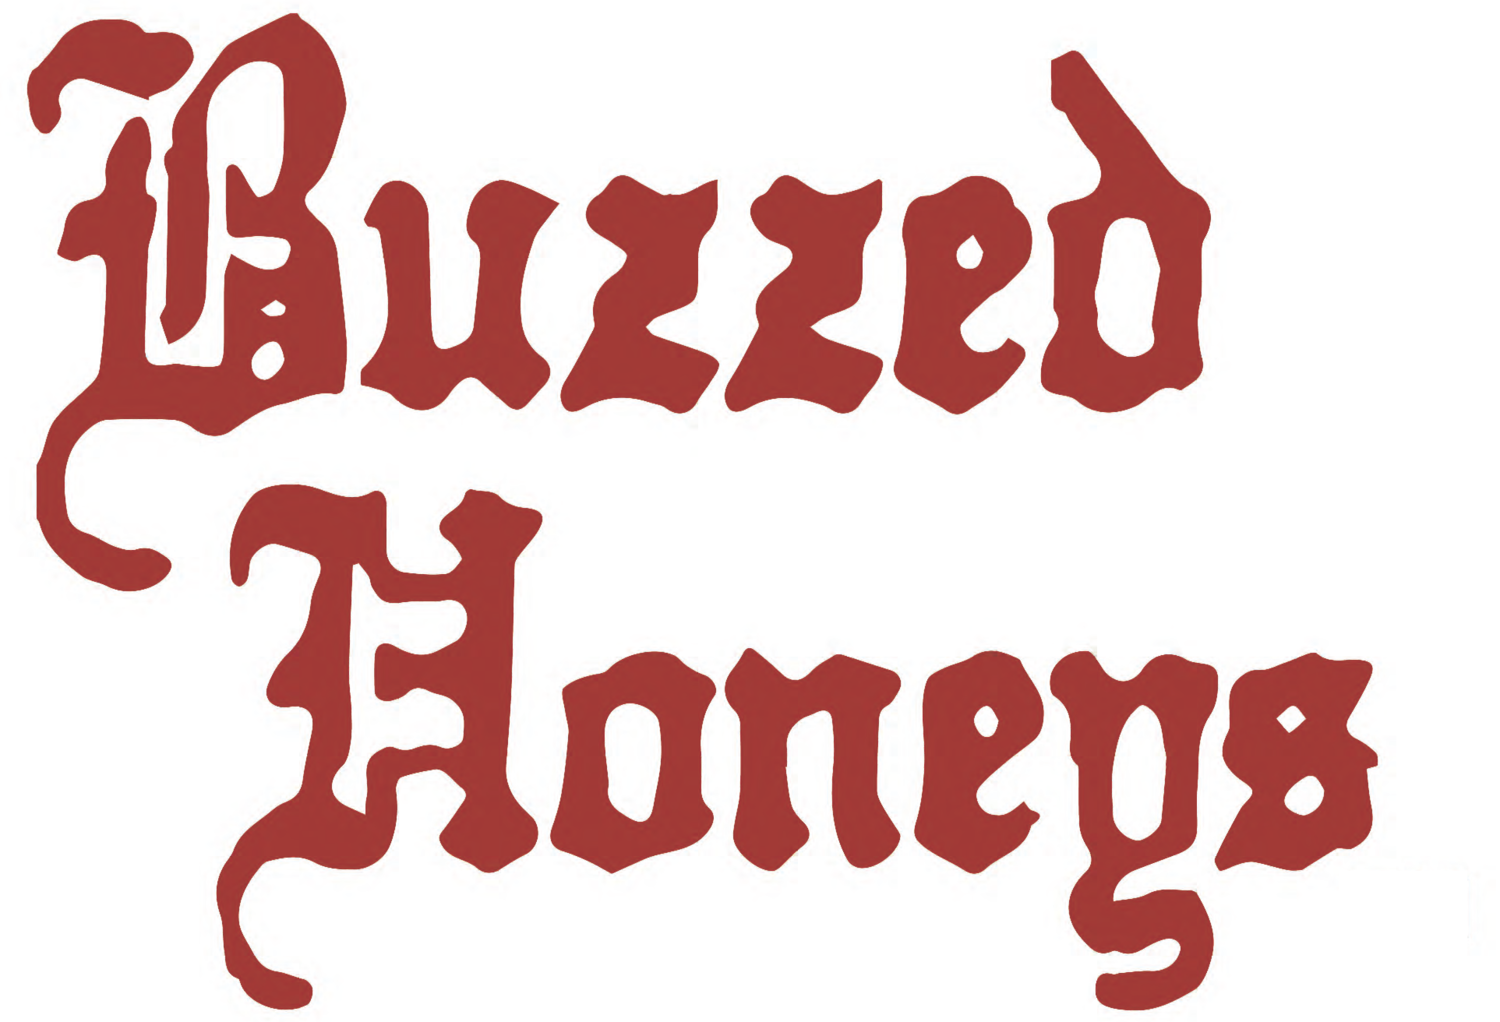 Buzzed Honeys